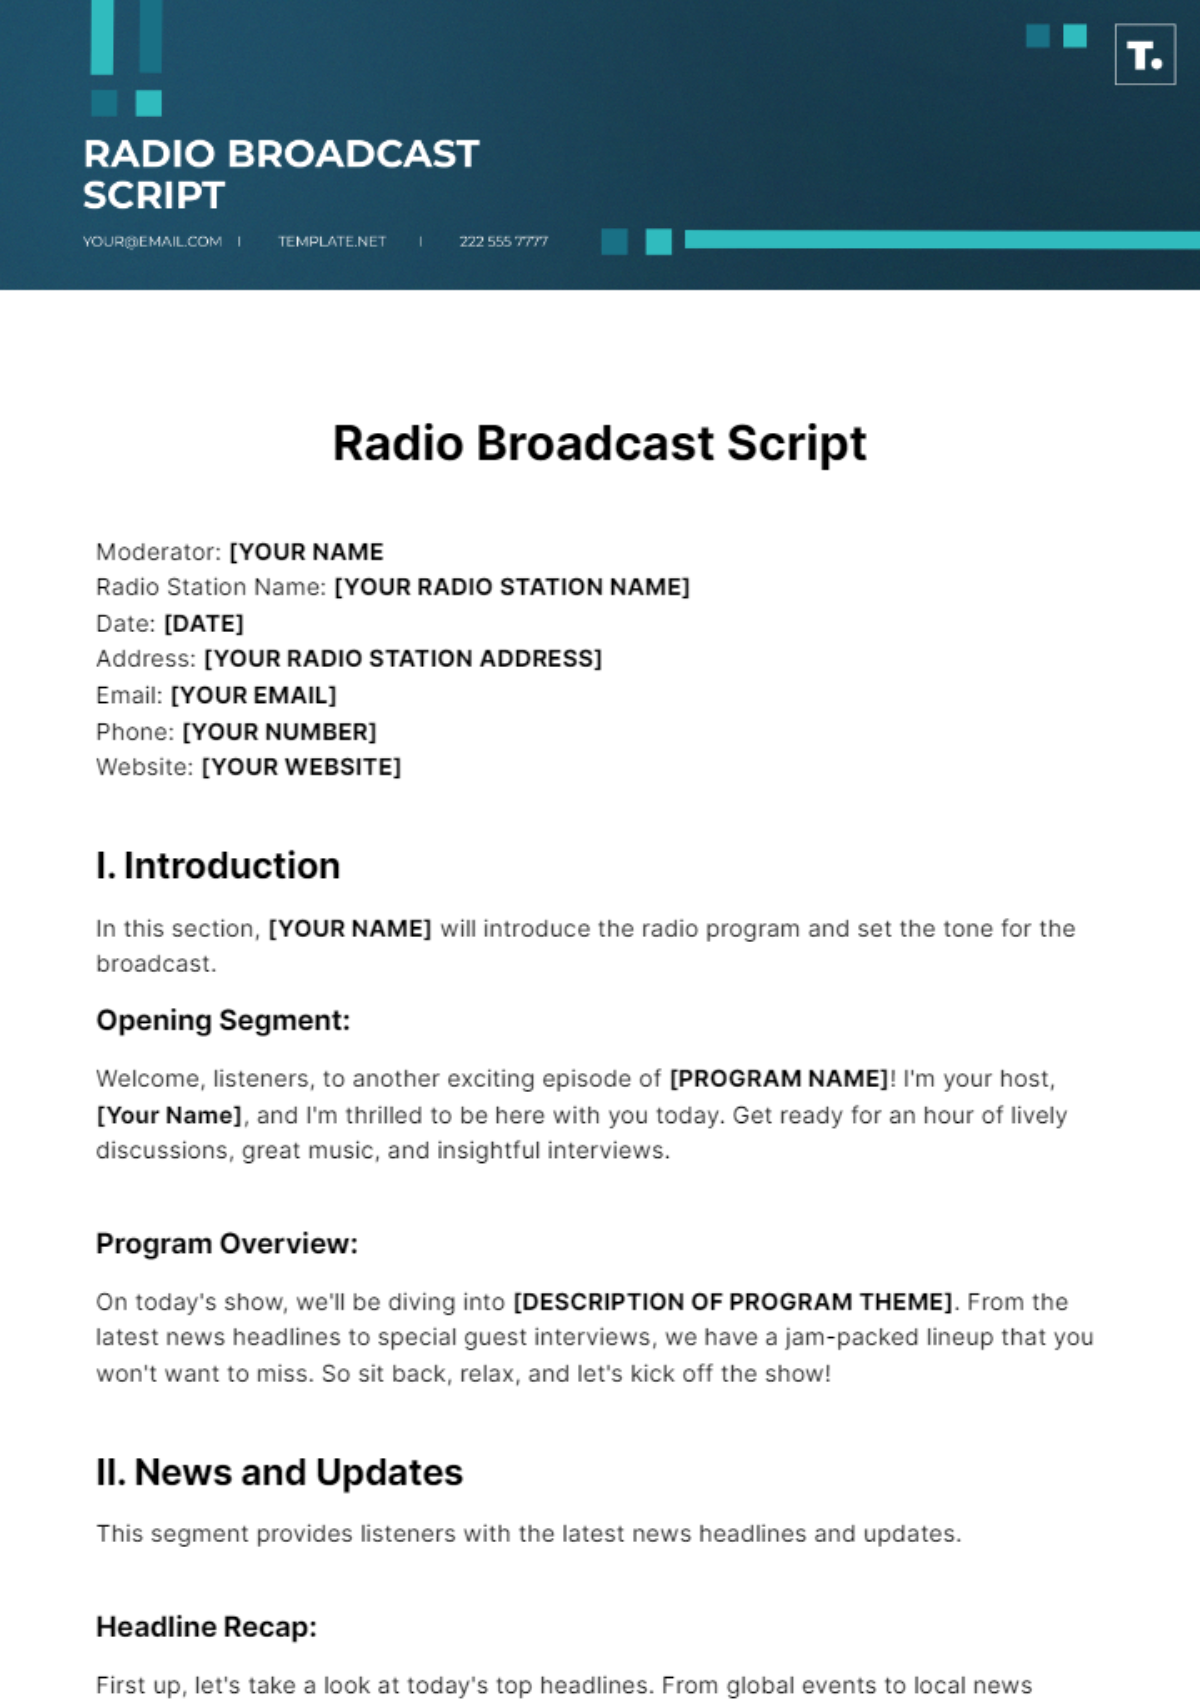 Radio Broadcast Script Template